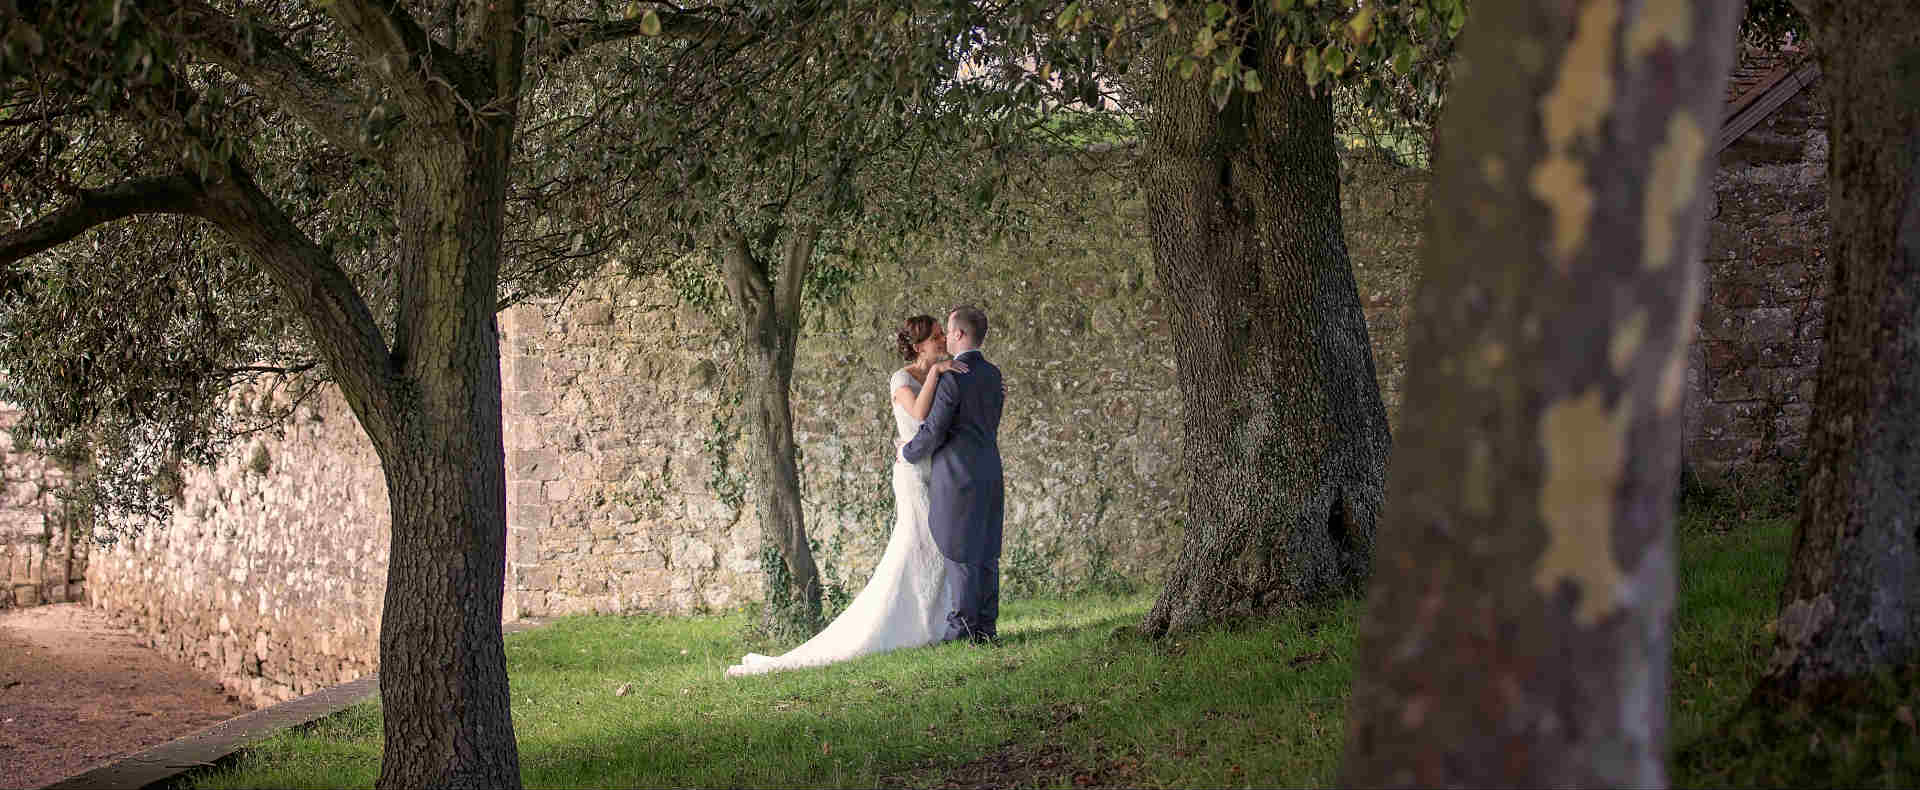 Real Weddings | Martin & Katie | Montagu Arms33